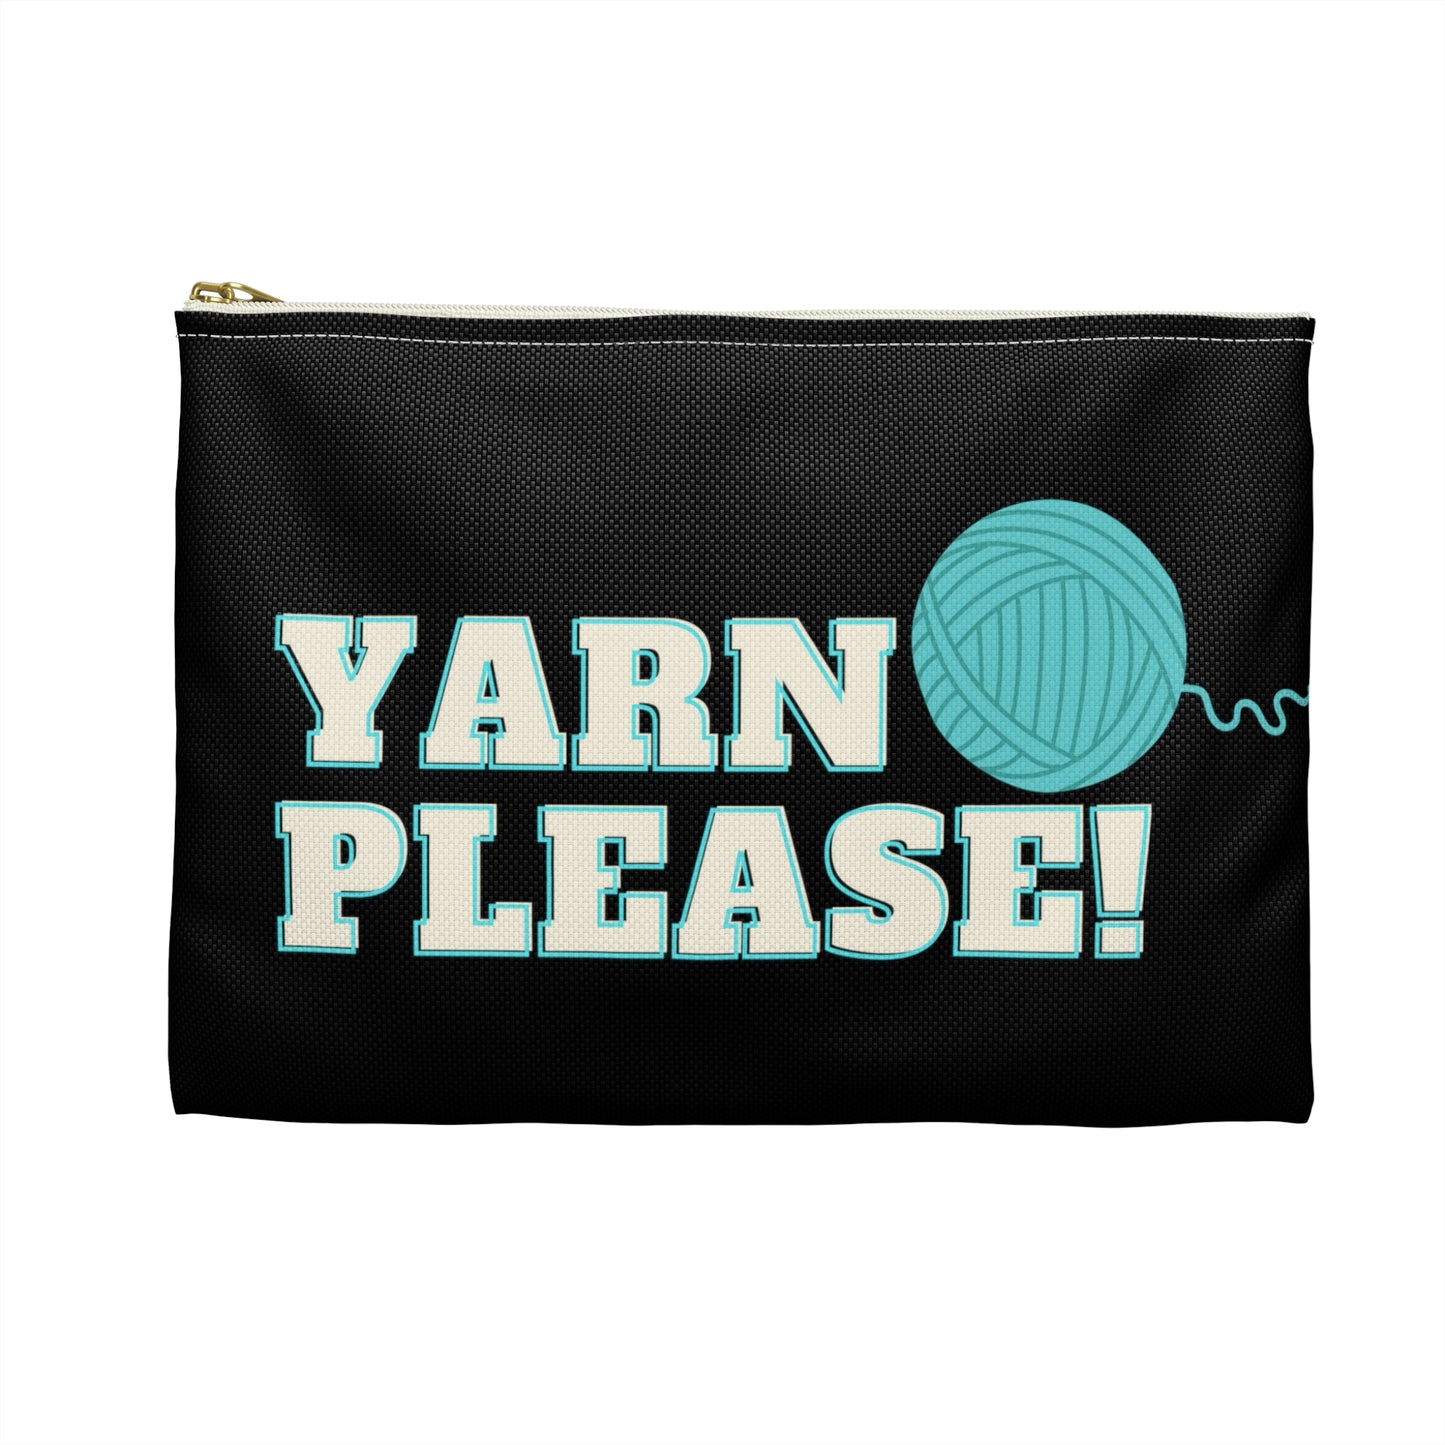 Yarn Please Accessory Pouch